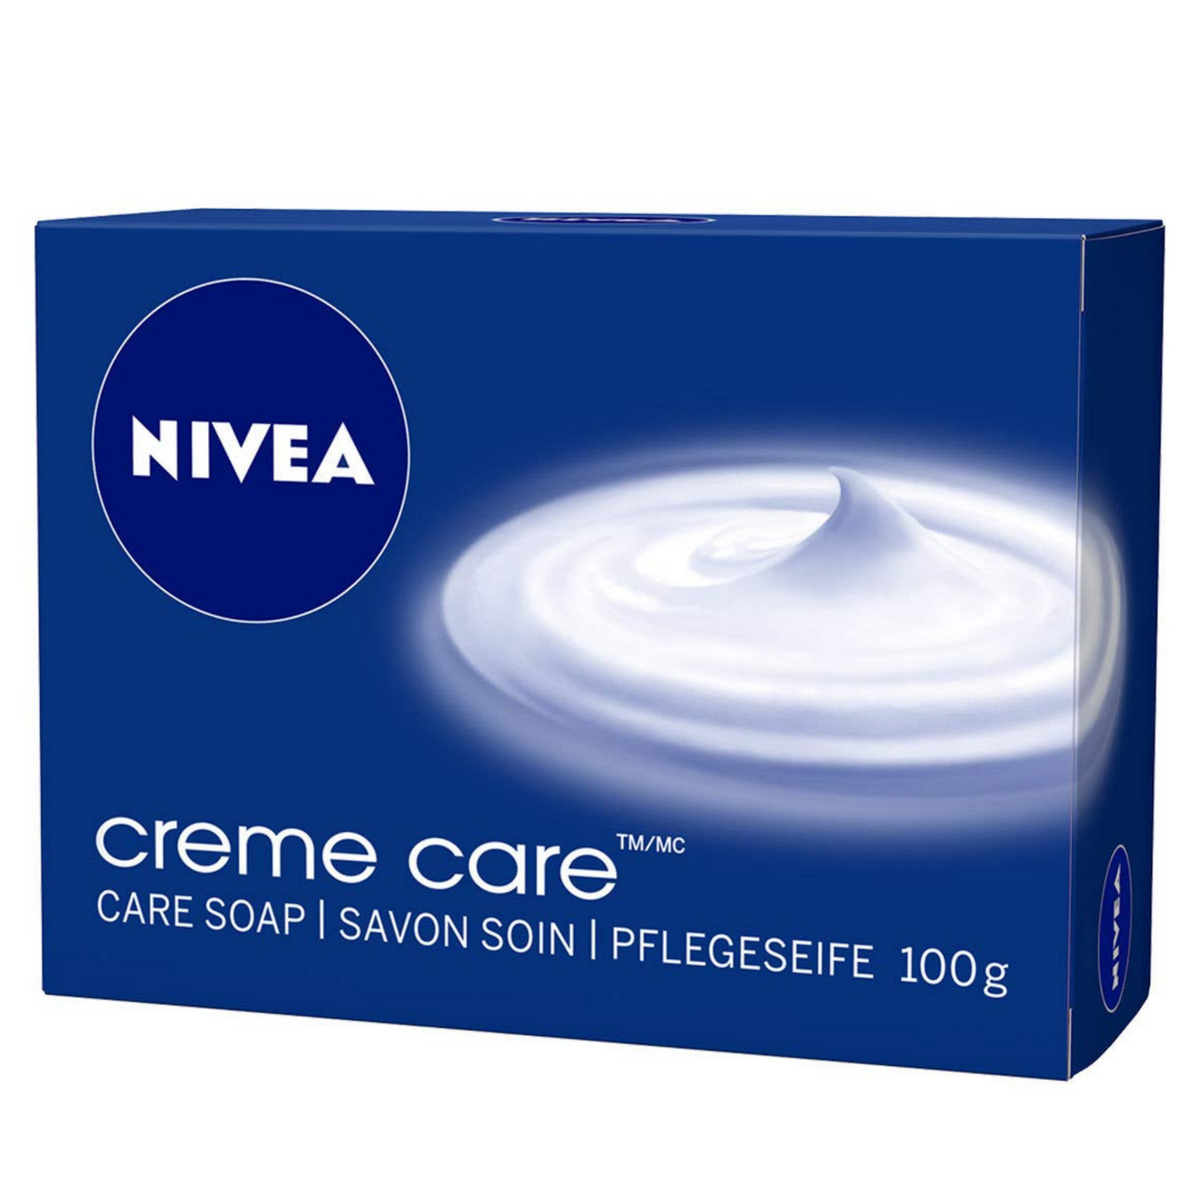 Primary image of Cream Care Soap